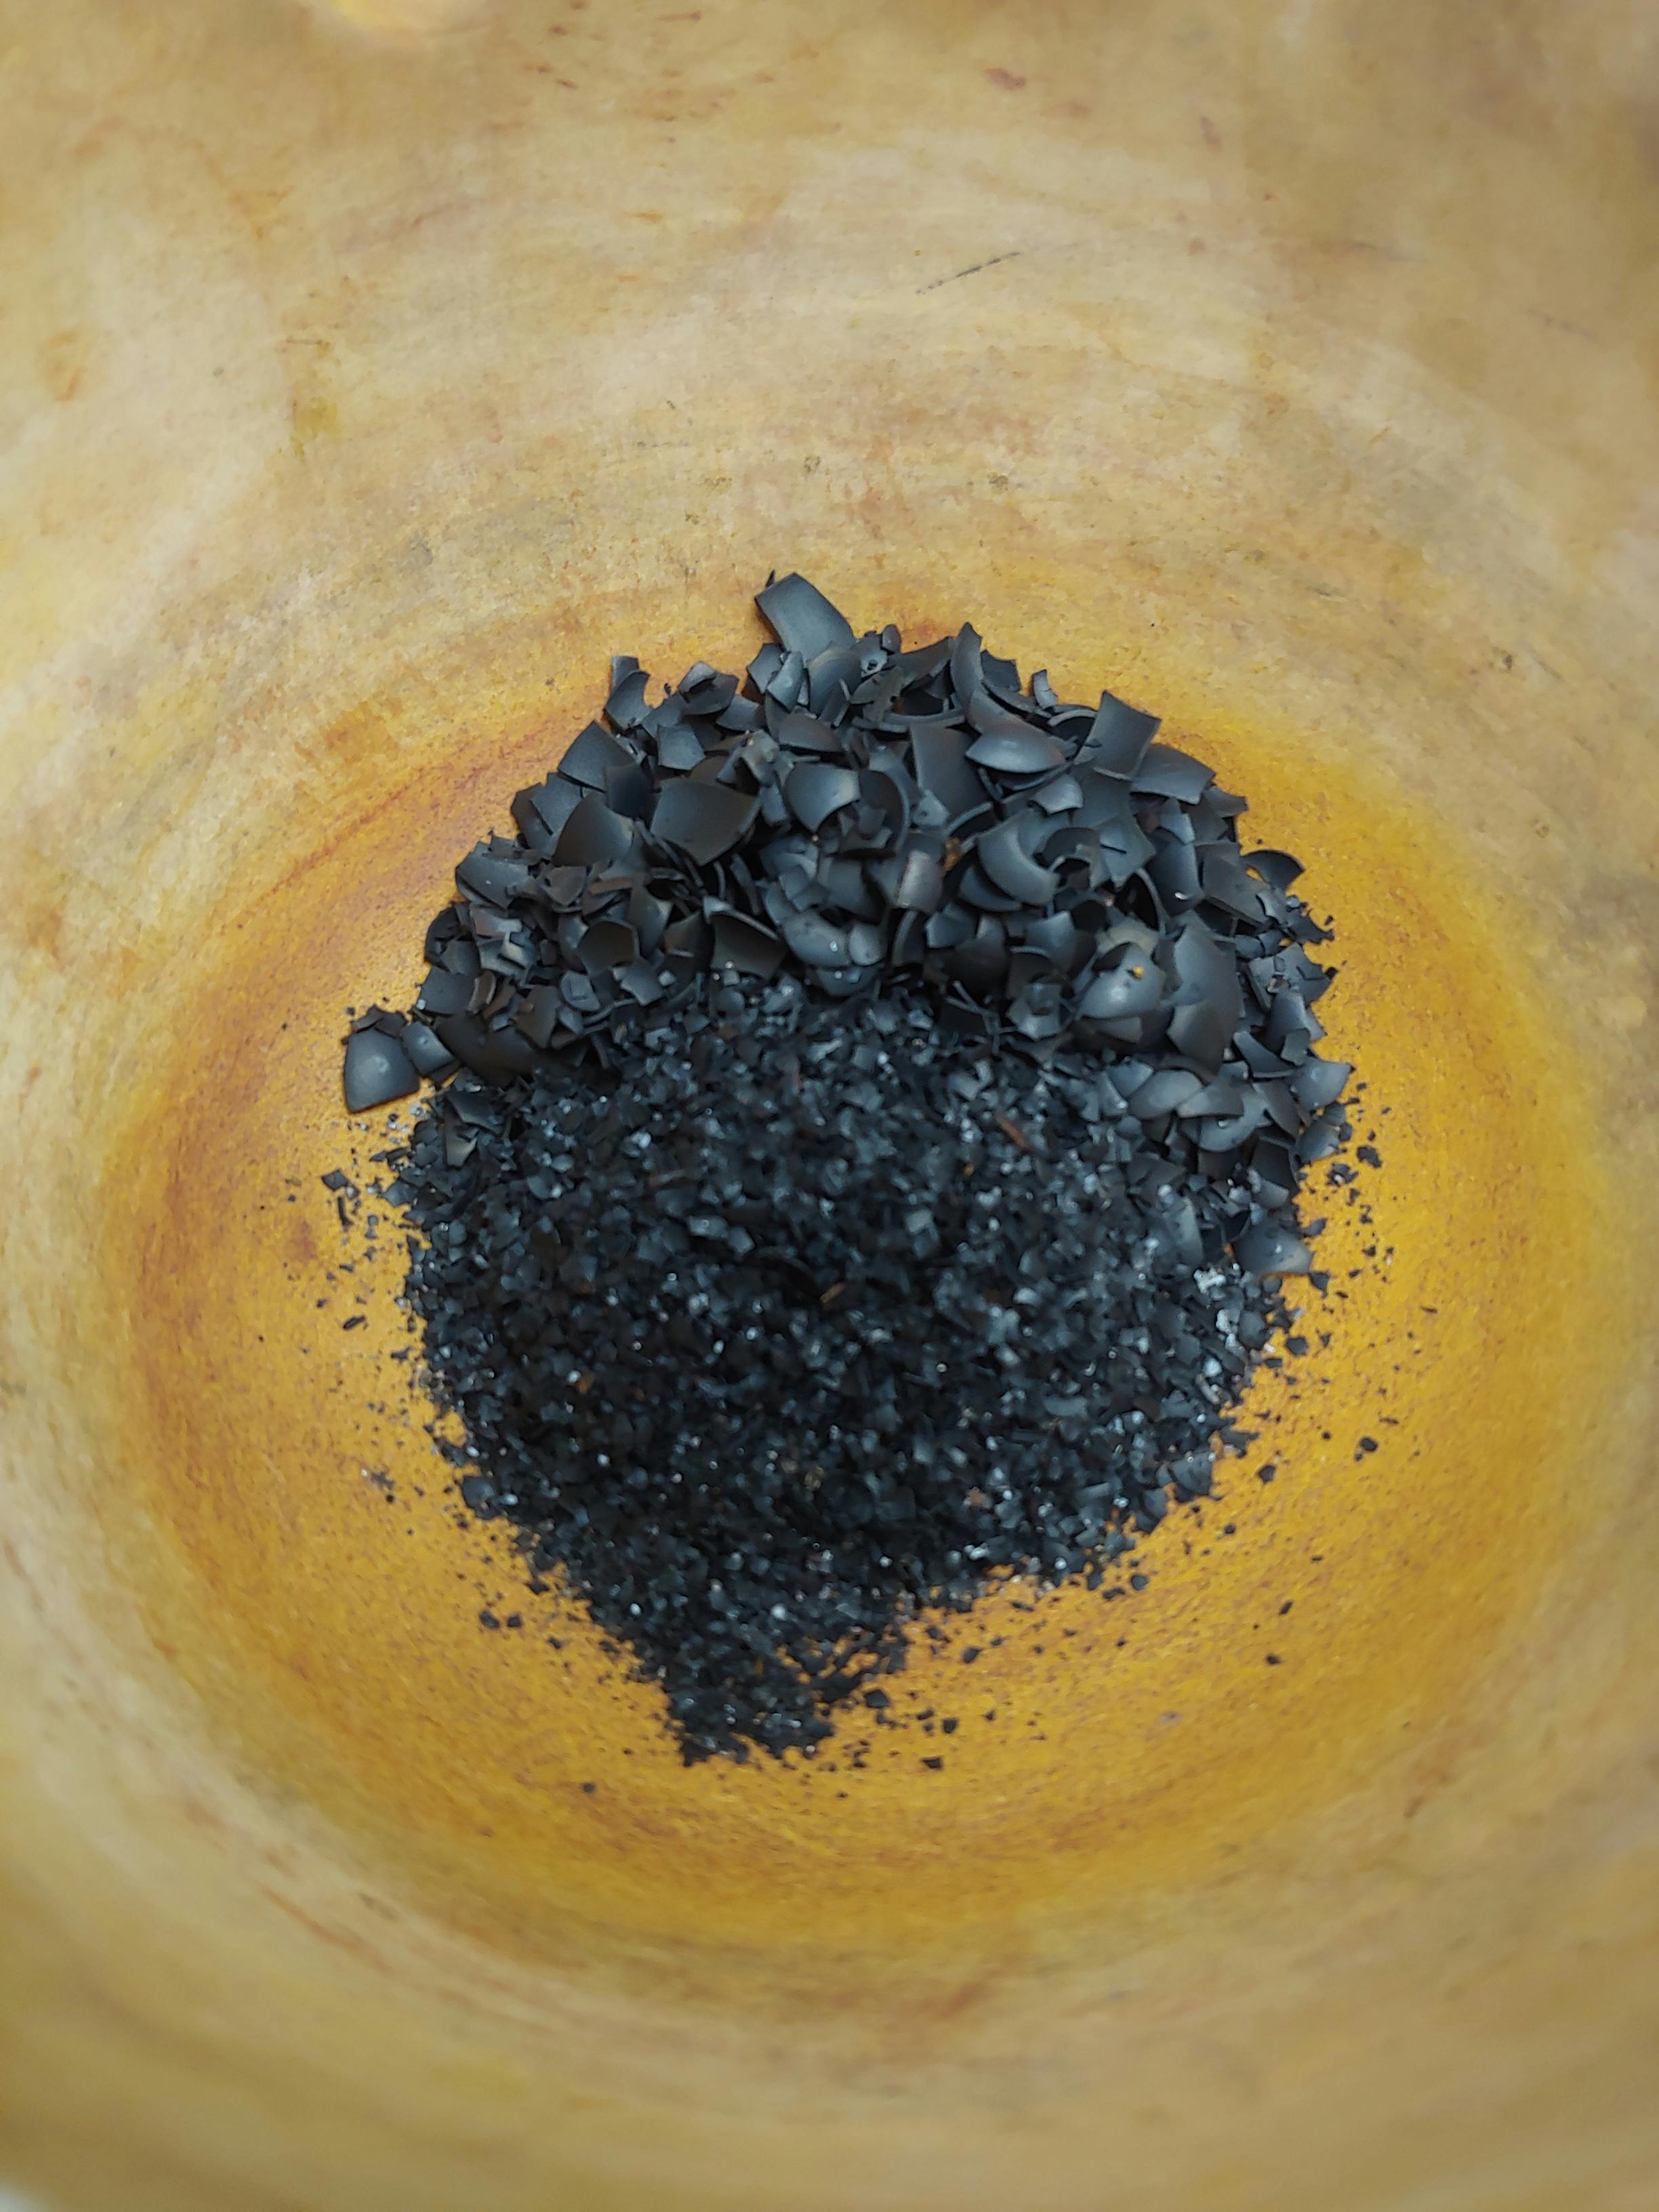 black crystals and powder in a mortar